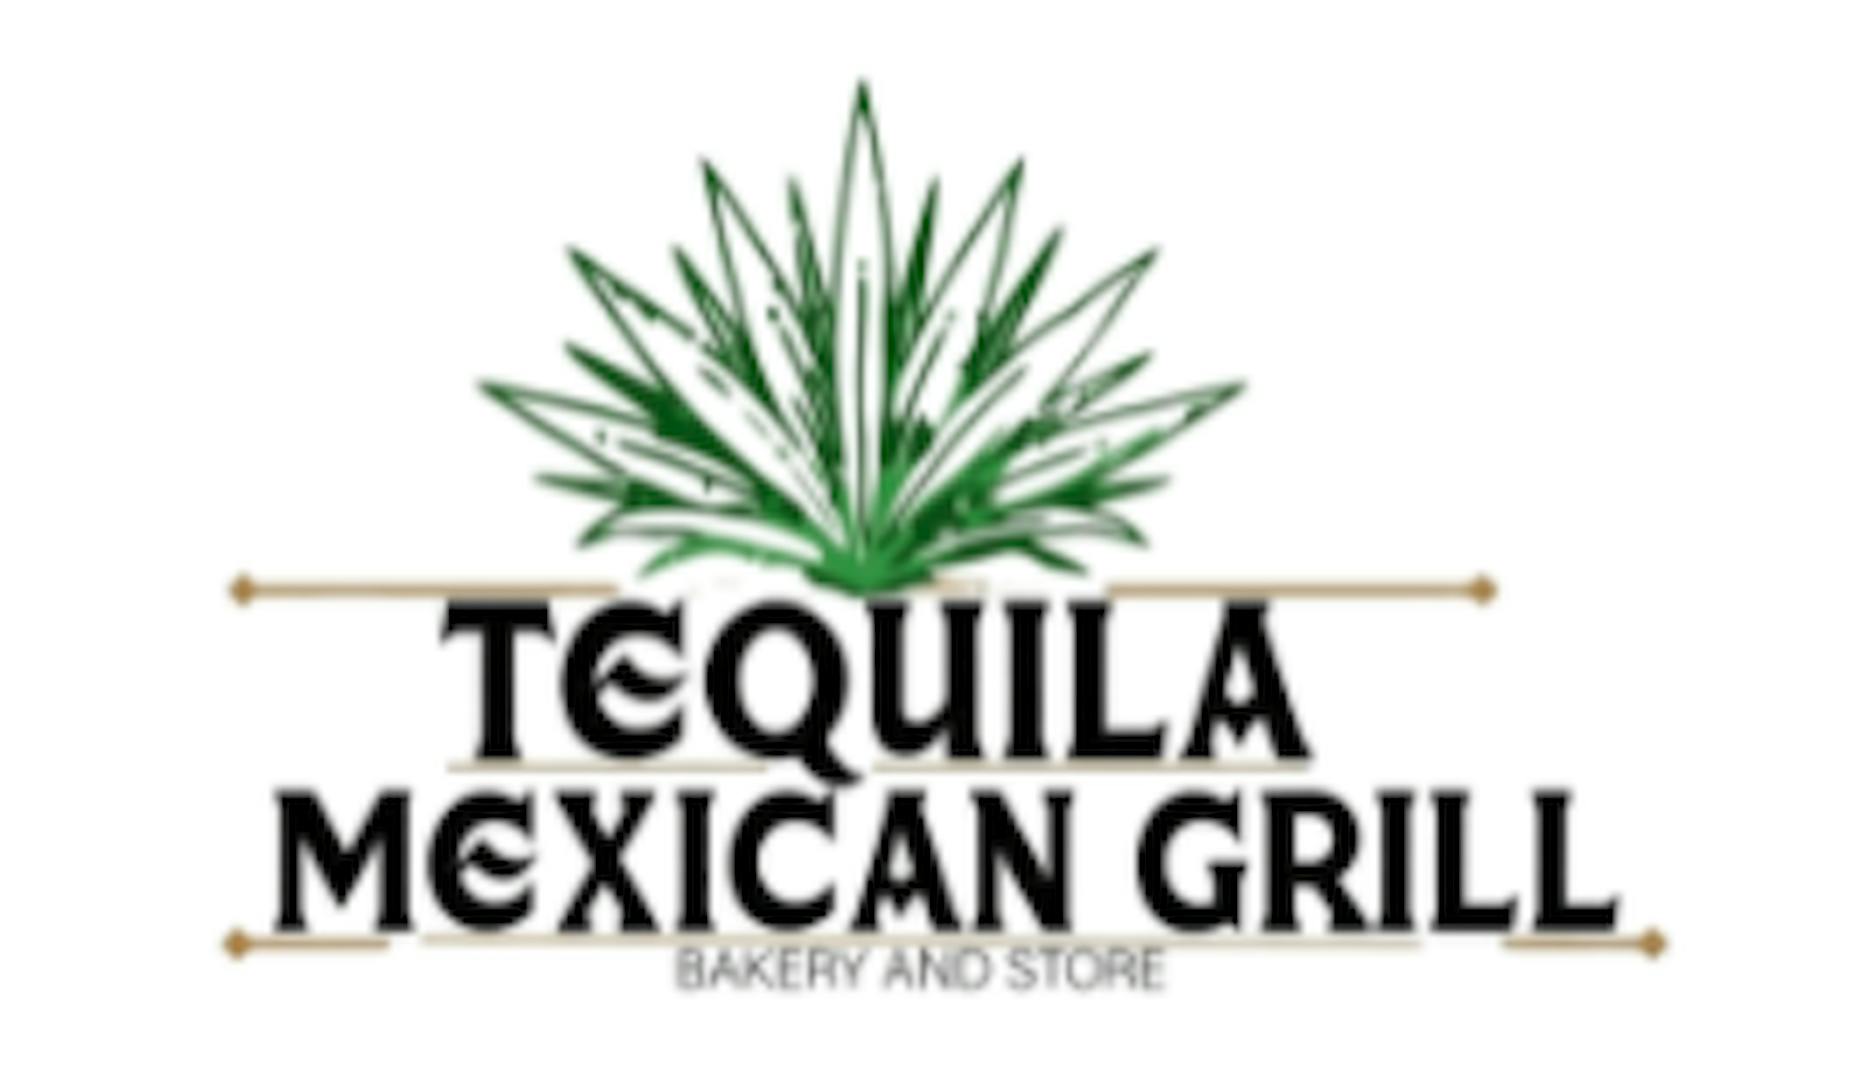 www.tequilamexicangrillbakeryandstore.com